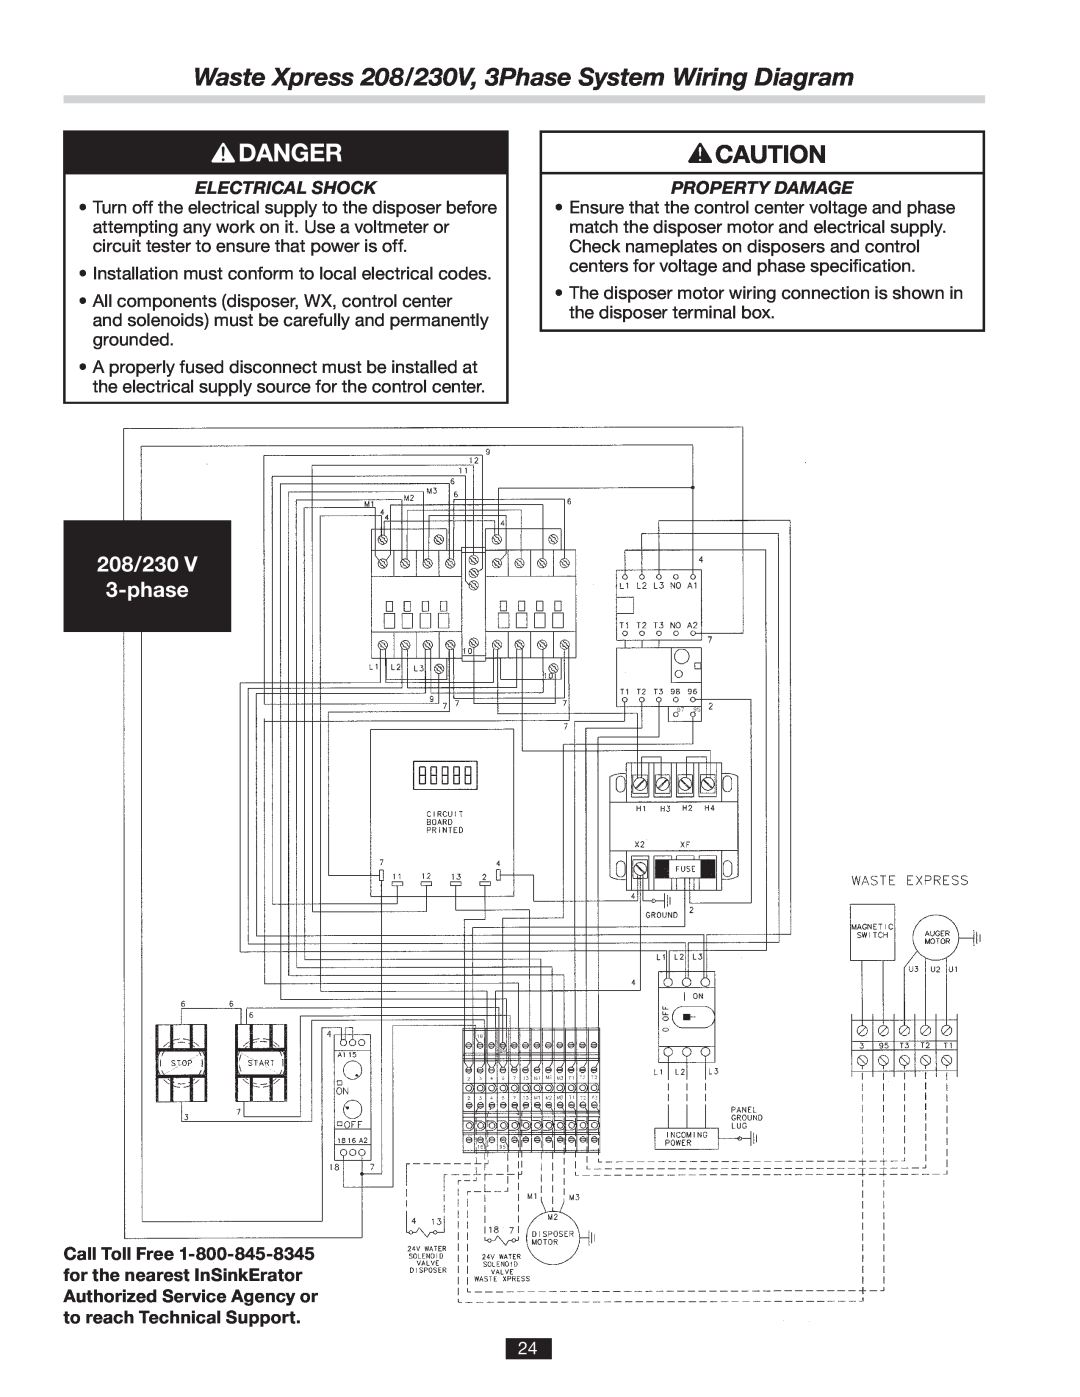 InSinkErator 14481 manual Waste Xpress 208/230V, 3Phase System Wiring Diagram, 120 208/230 1-phase 3-phase 1/2 to 2 HP 